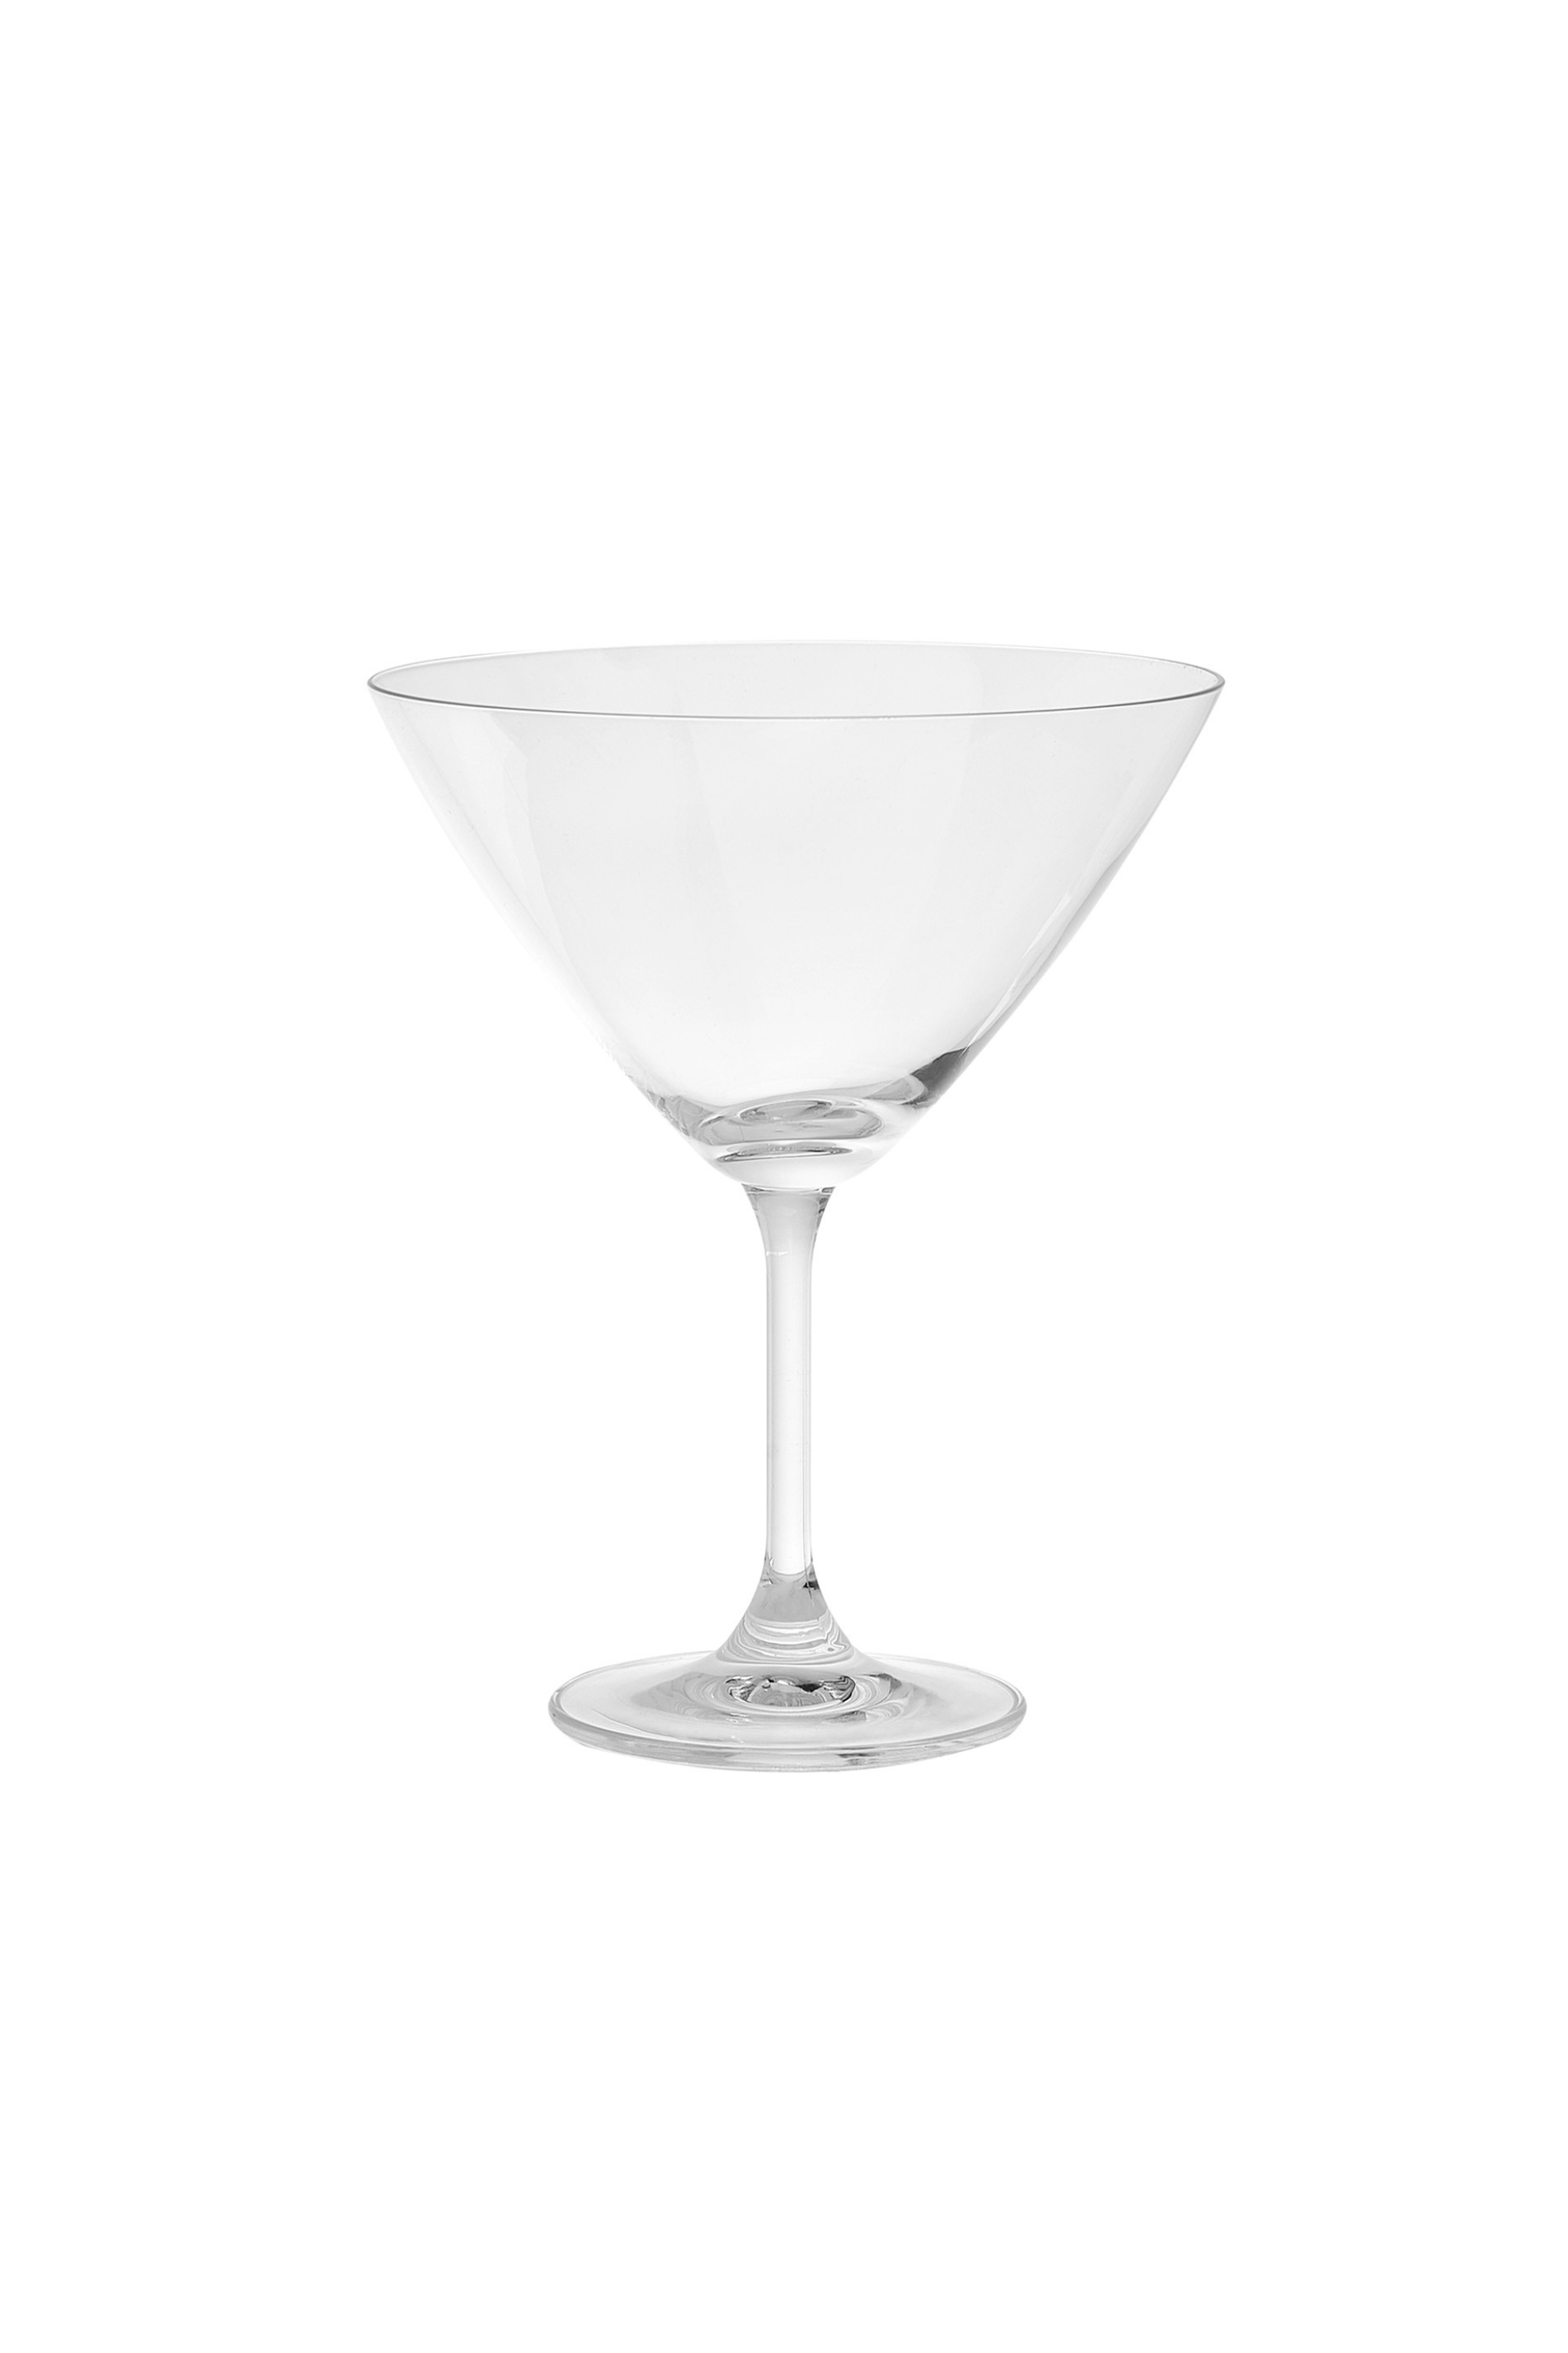 Home > ΚΟΥΖΙΝΑ > Υαλικά > Ποτήρια Coincasa σετ ποτήρια Martini "Kolibri" (6 τεμάχια) - 007138759 Διάφανο